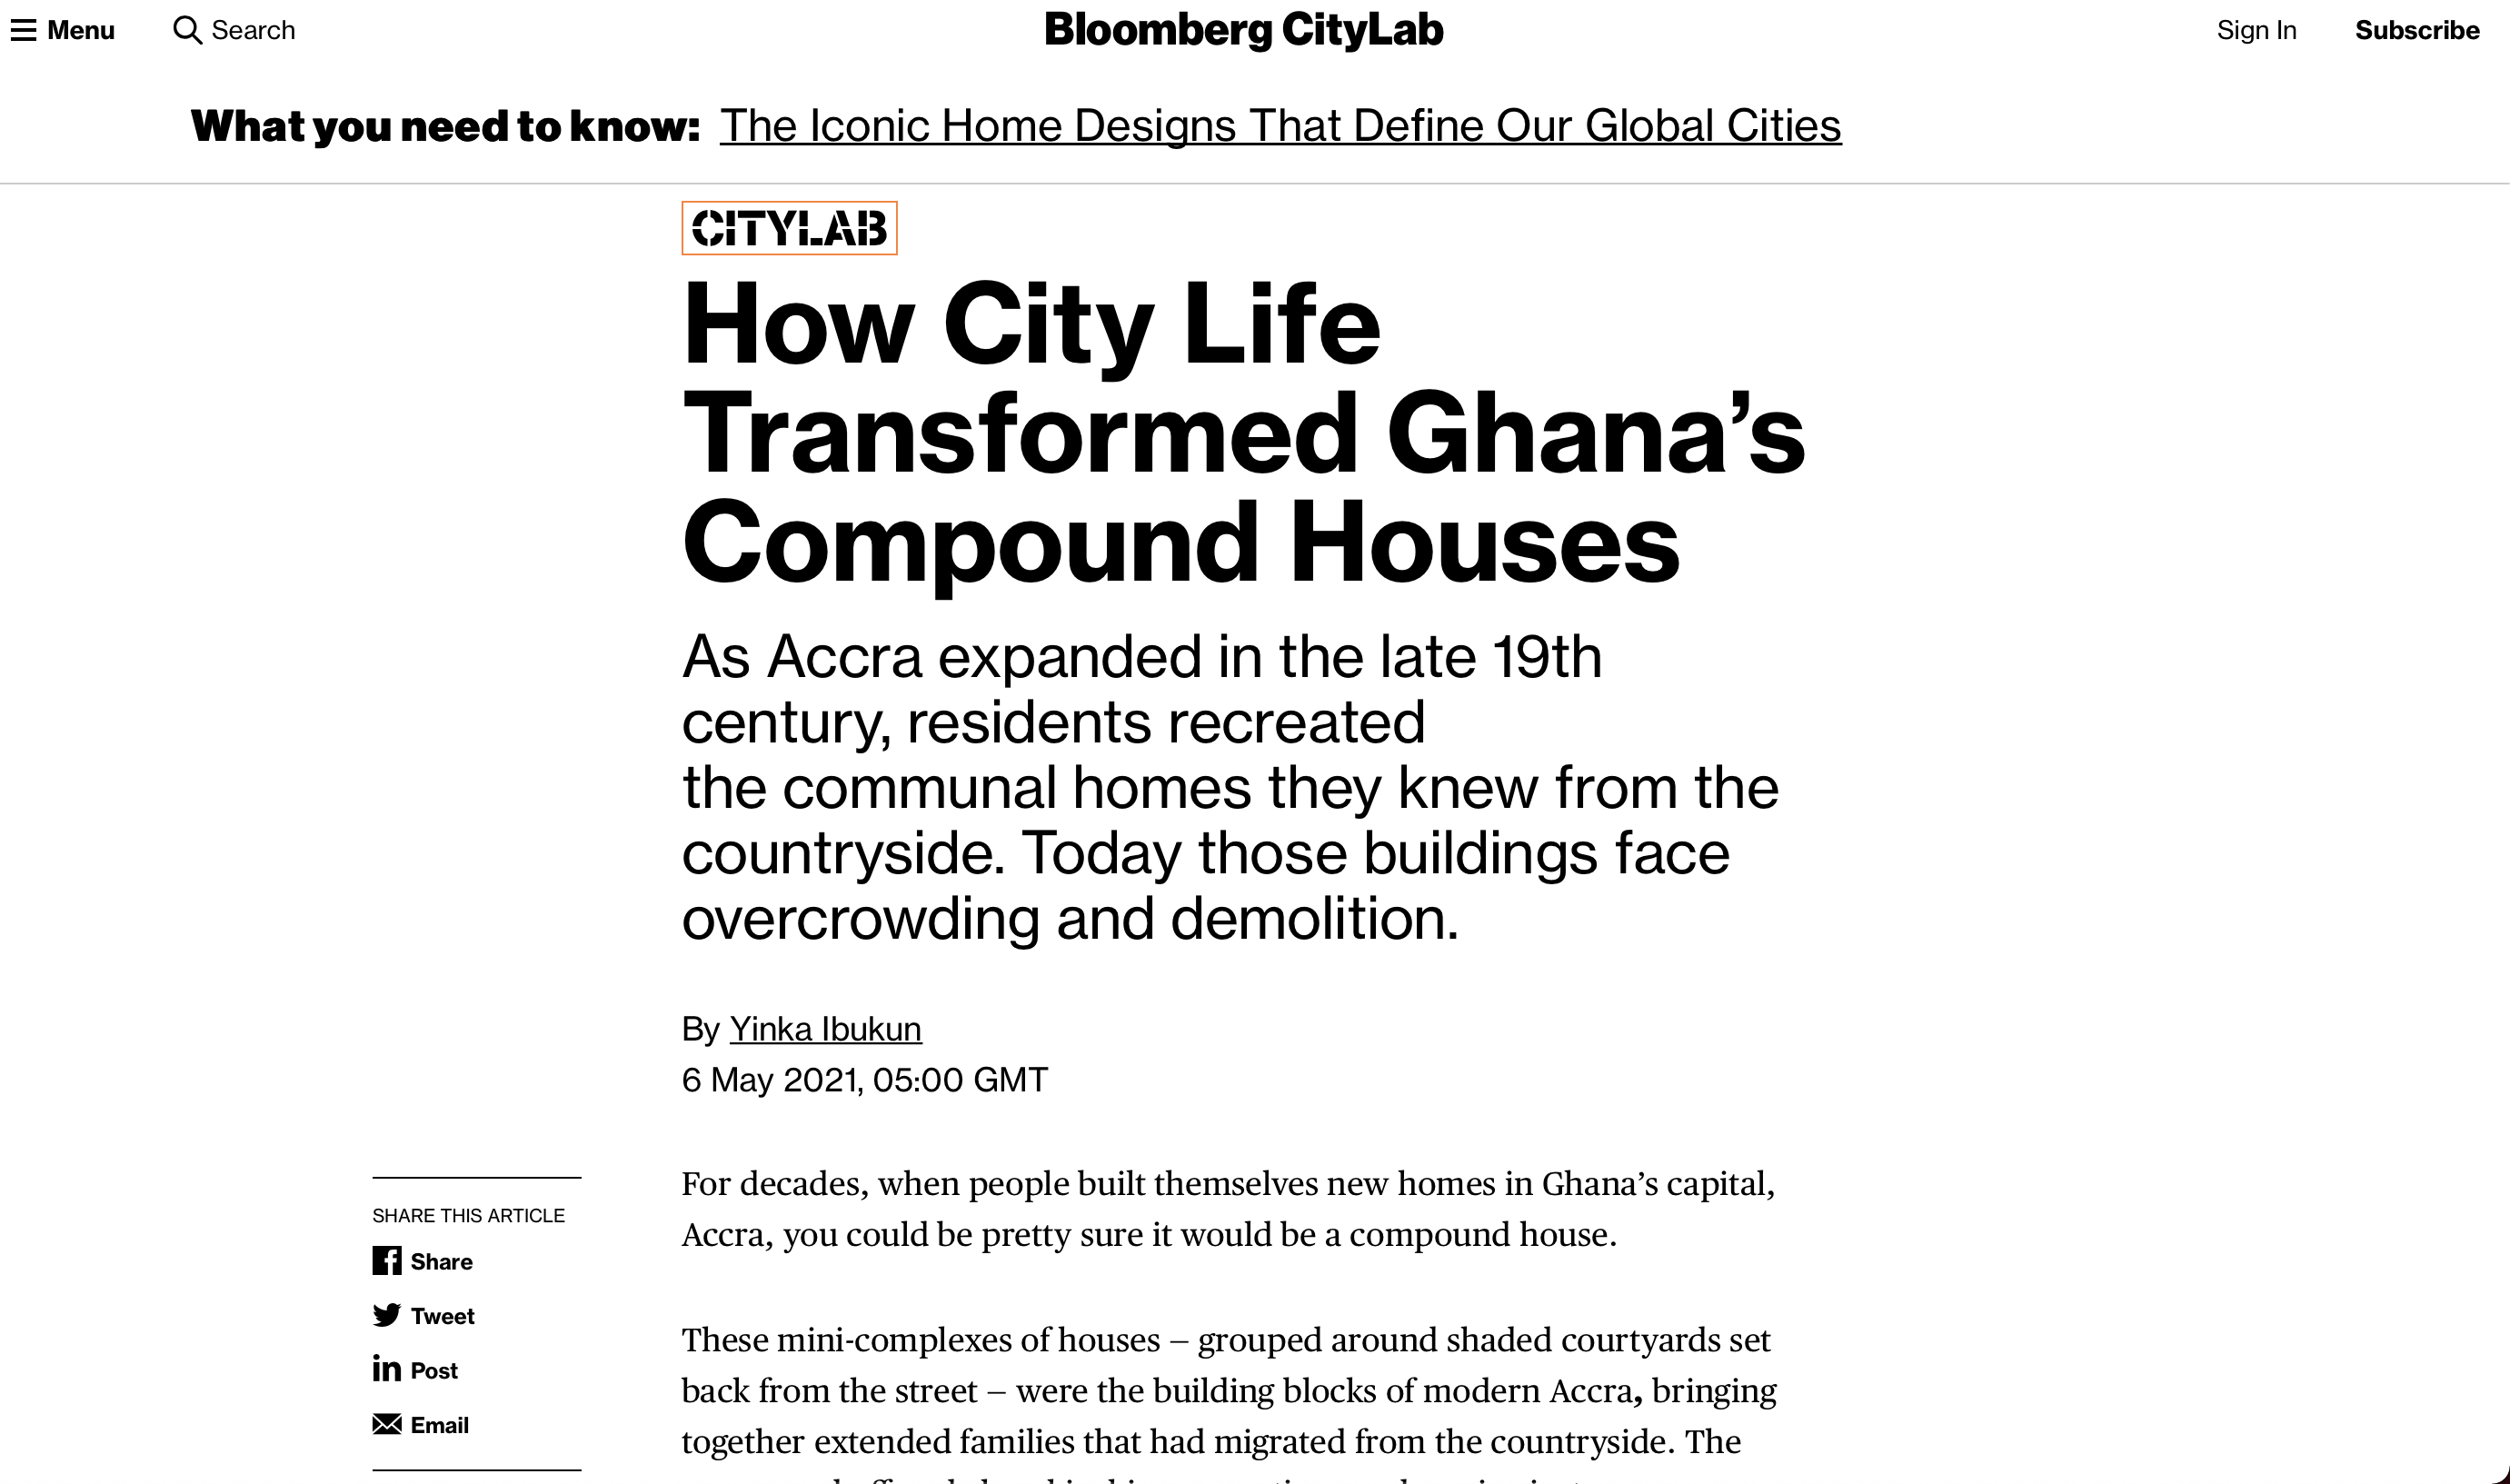 How City Life Transformed Ghana's Compound Houses